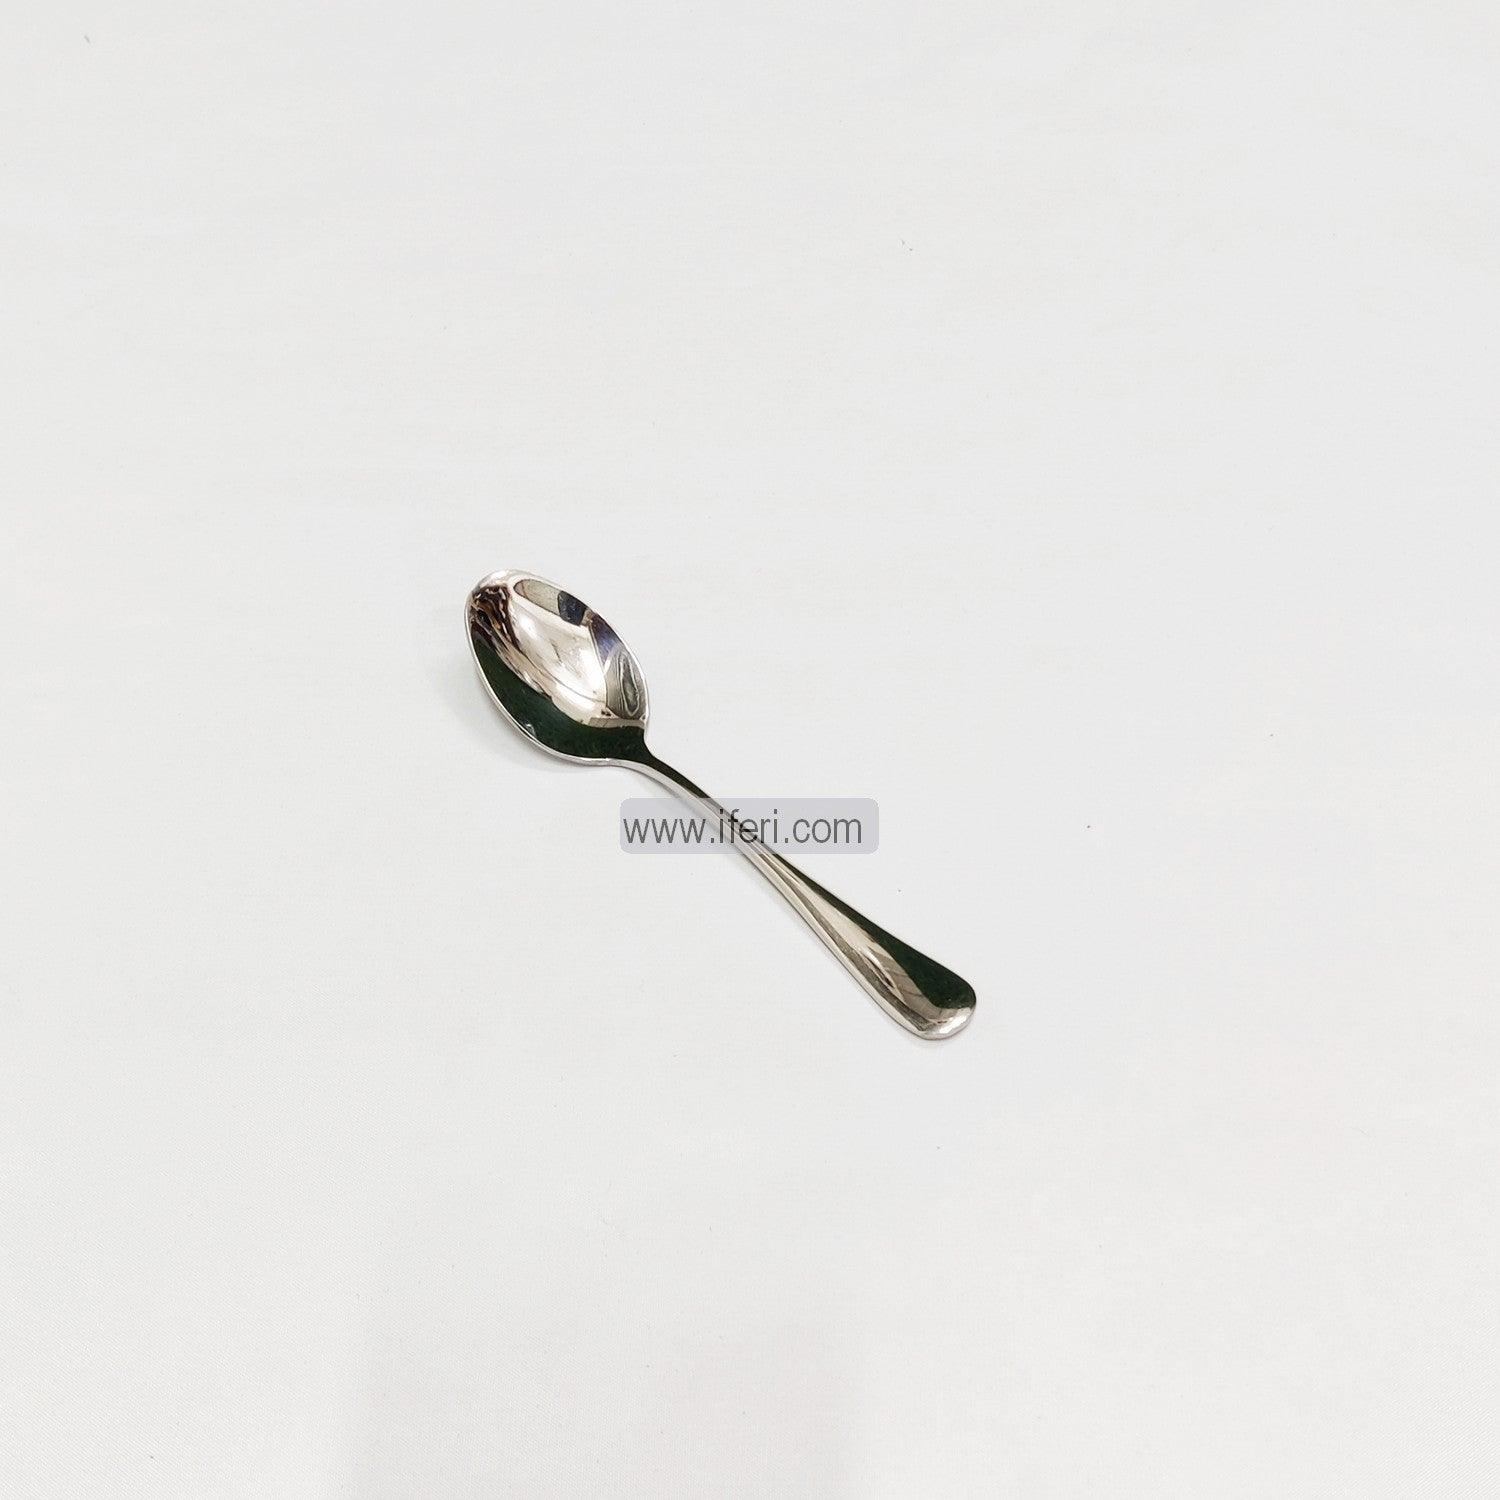 5.3 inch 6 pcs Metal Dessert Spoon 10/04 Price in Bangladesh - iferi.com